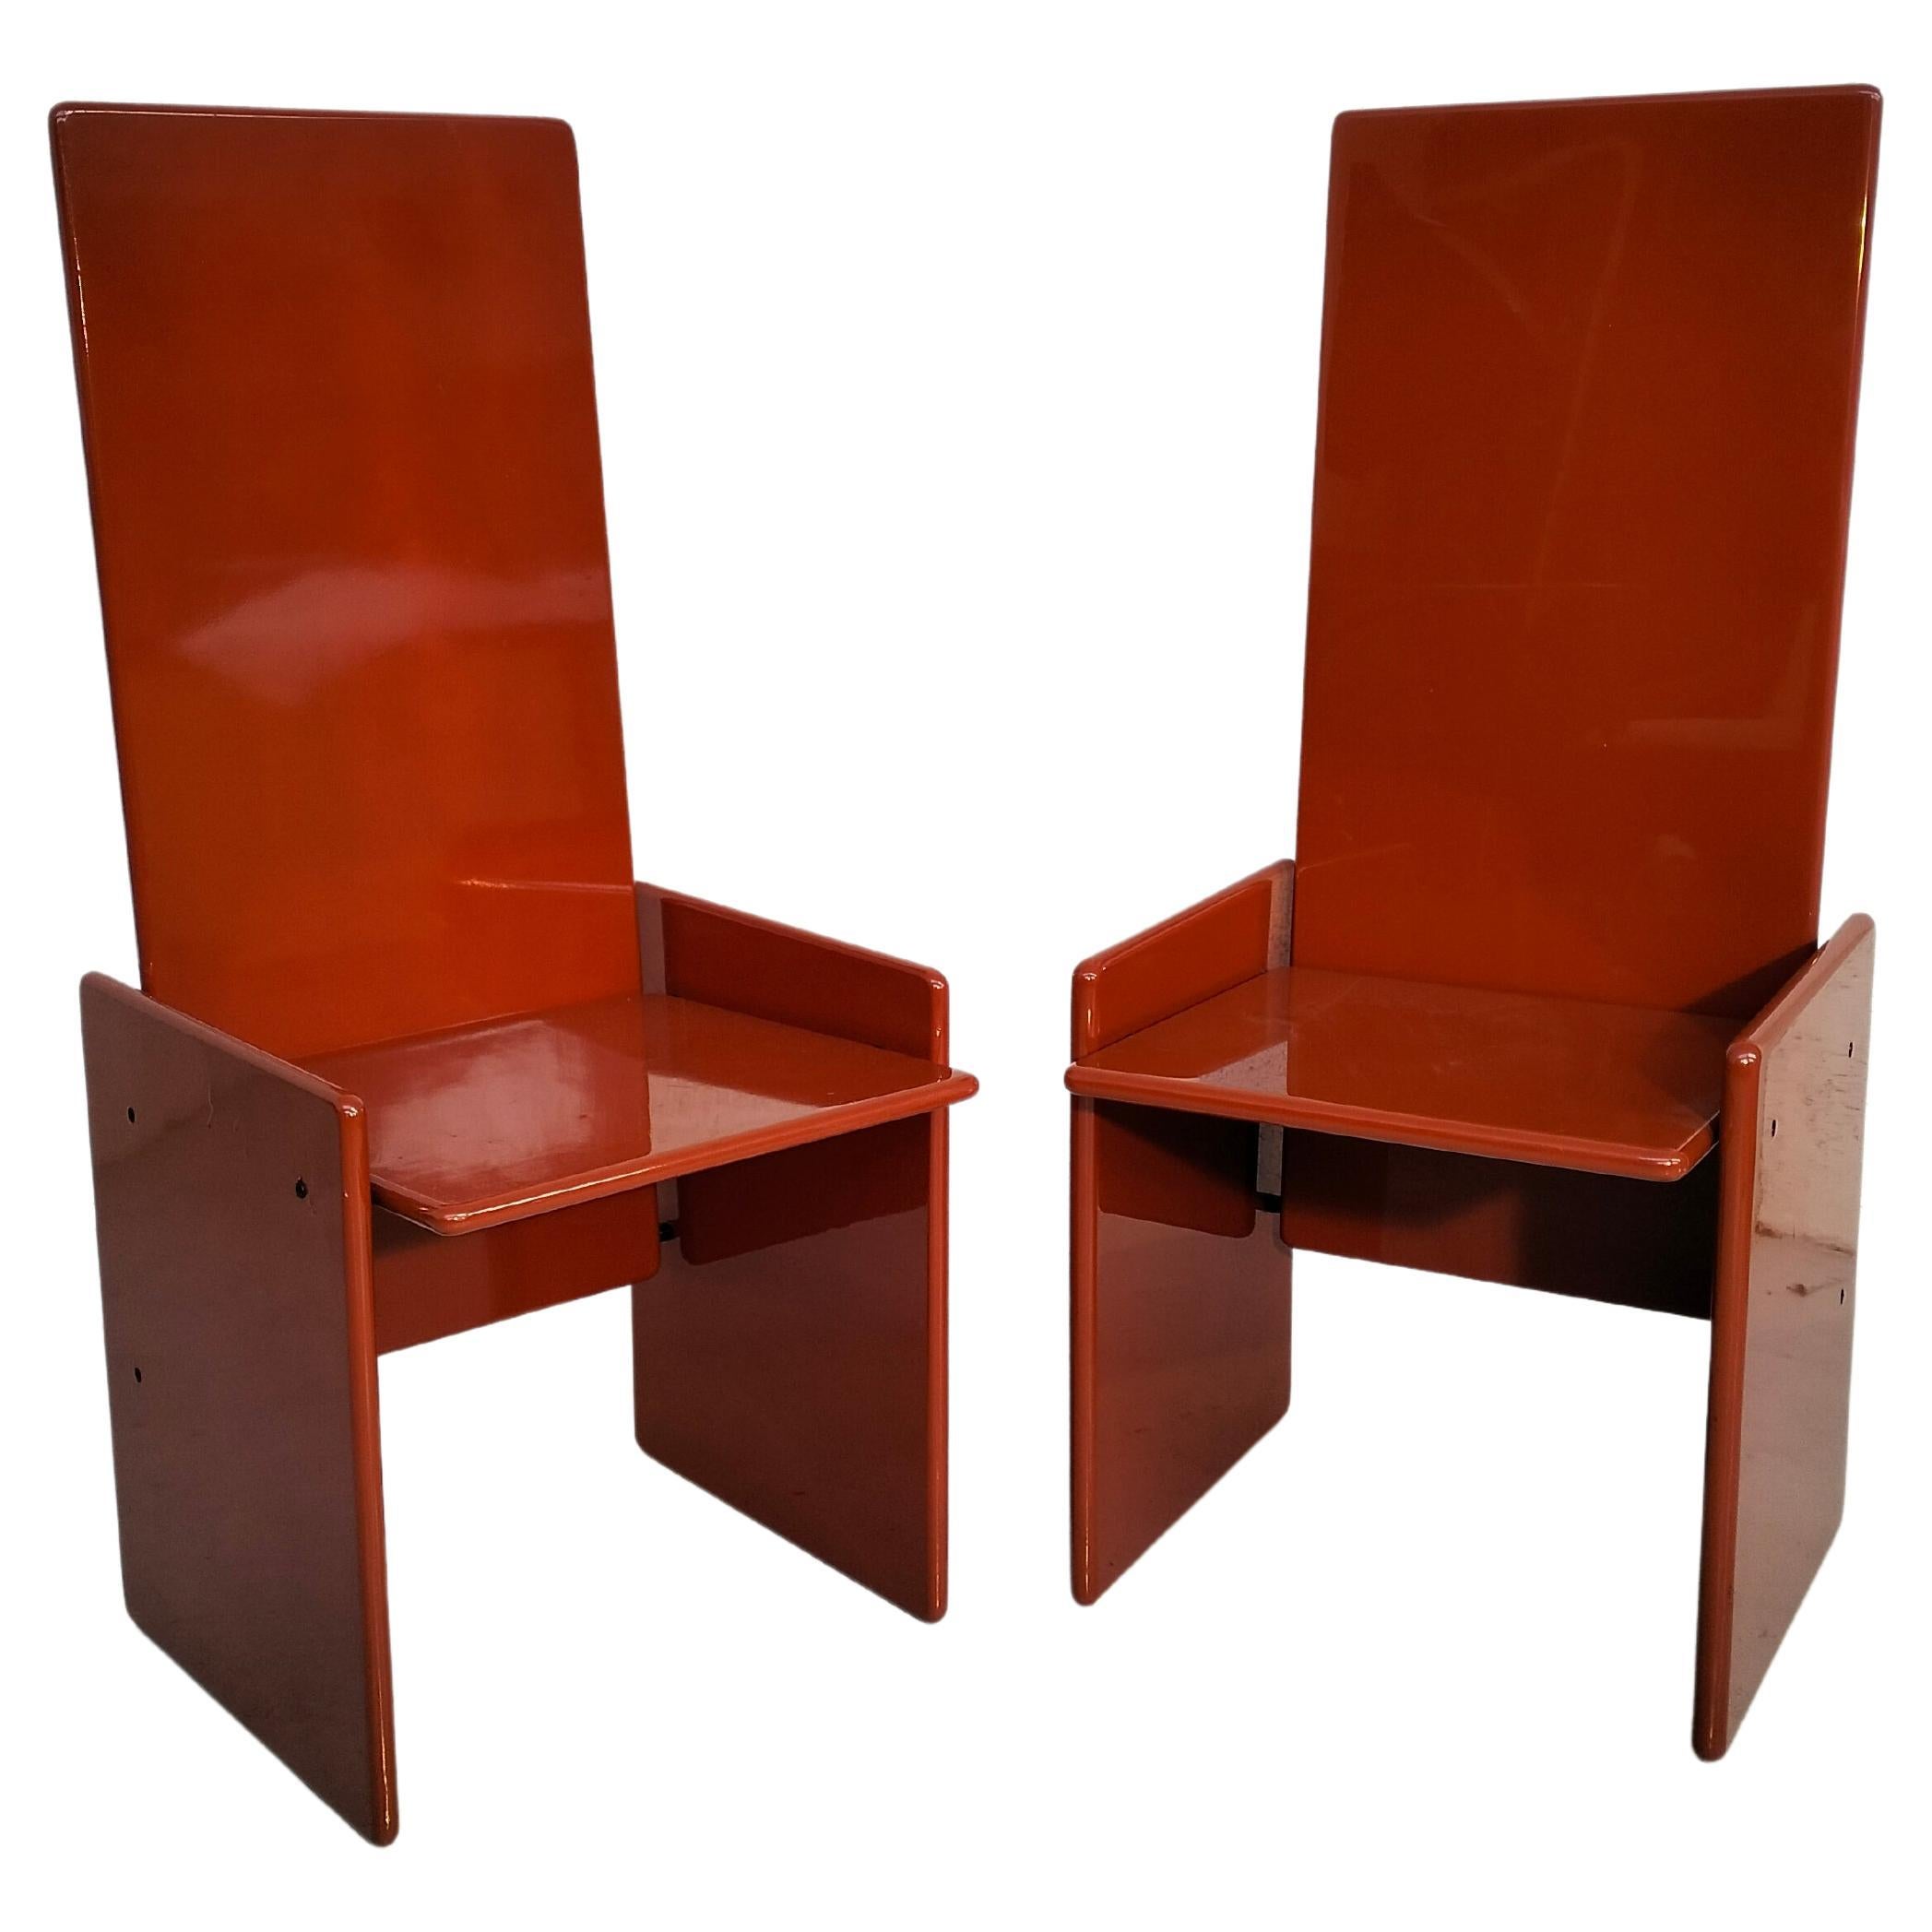 Pair of 2 orange Kazuki chairs by Kazuhide Takahama for Simon 60s, 70s